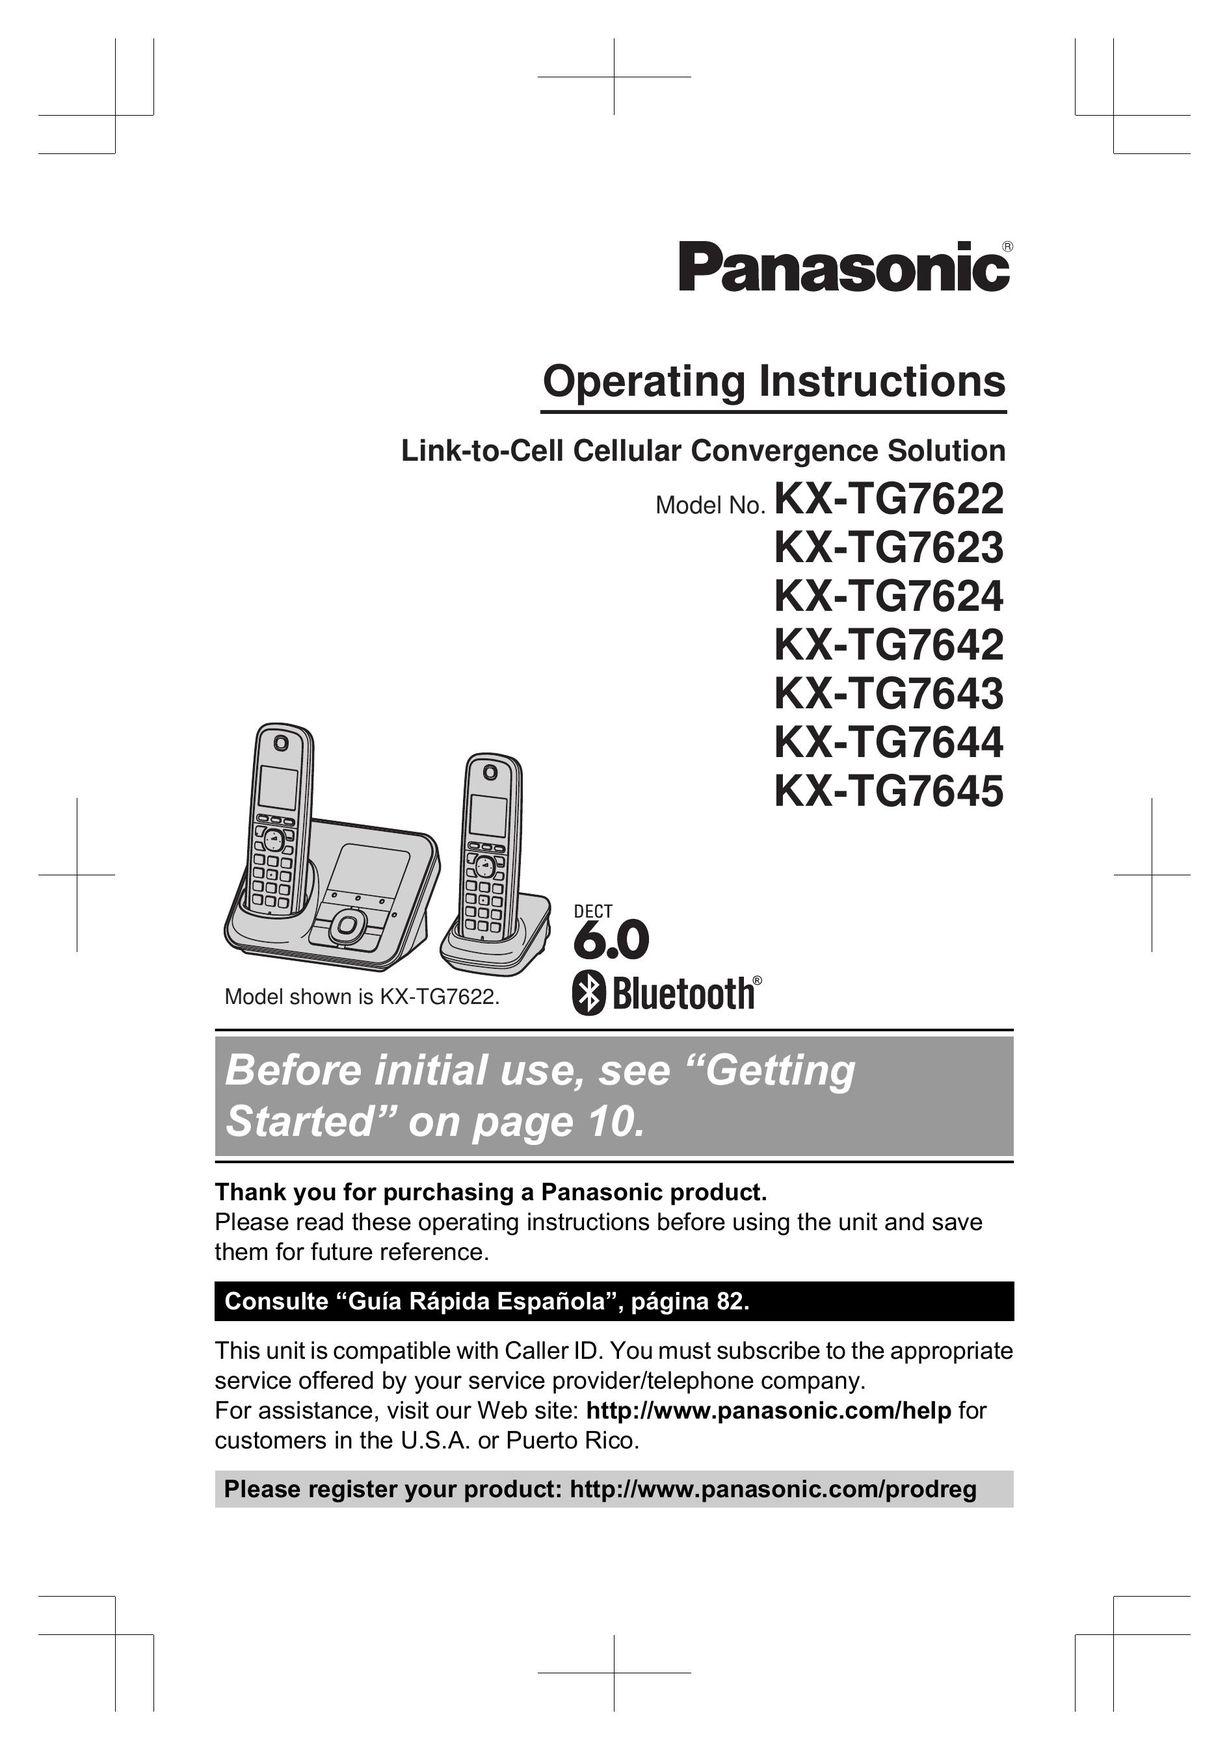 Panasonic KXTG7642M Bluetooth Headset User Manual